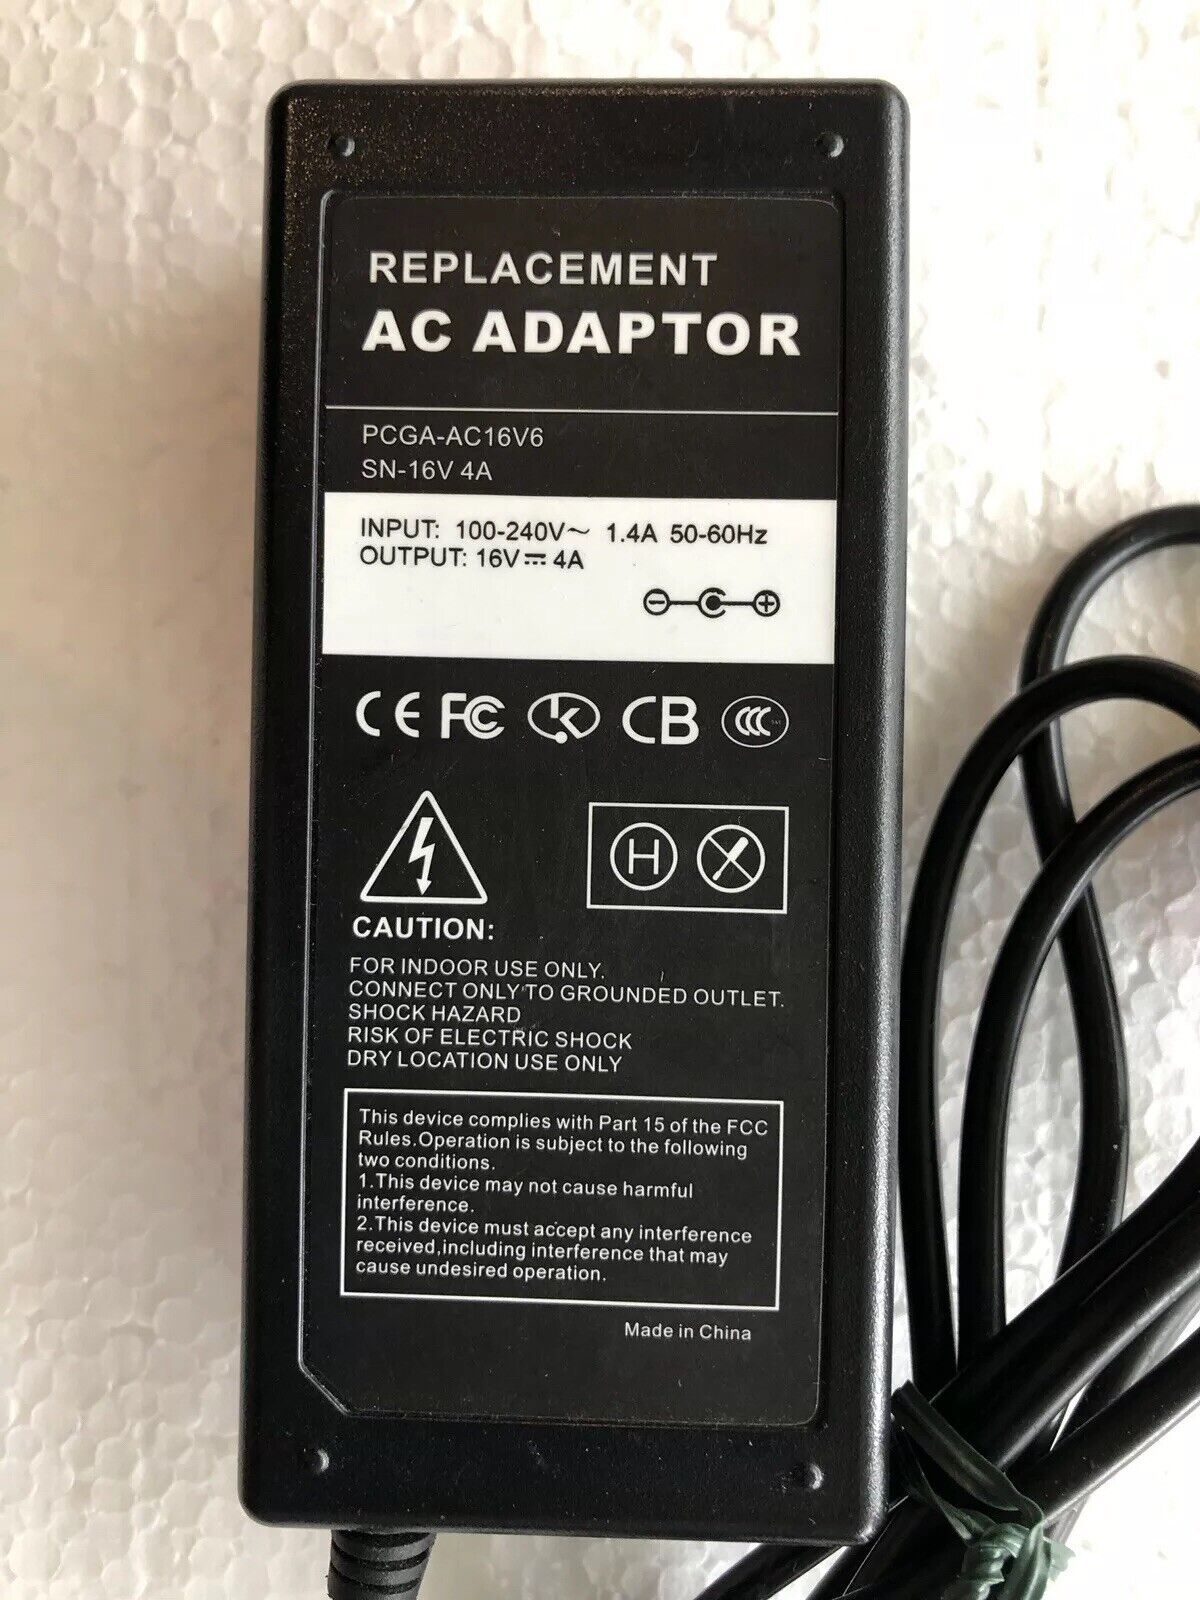 Replacement AC Adapter Charger for Sony Vaio VGP-AC16V8 PCGA-AC16V8 PCGA-AC16V6